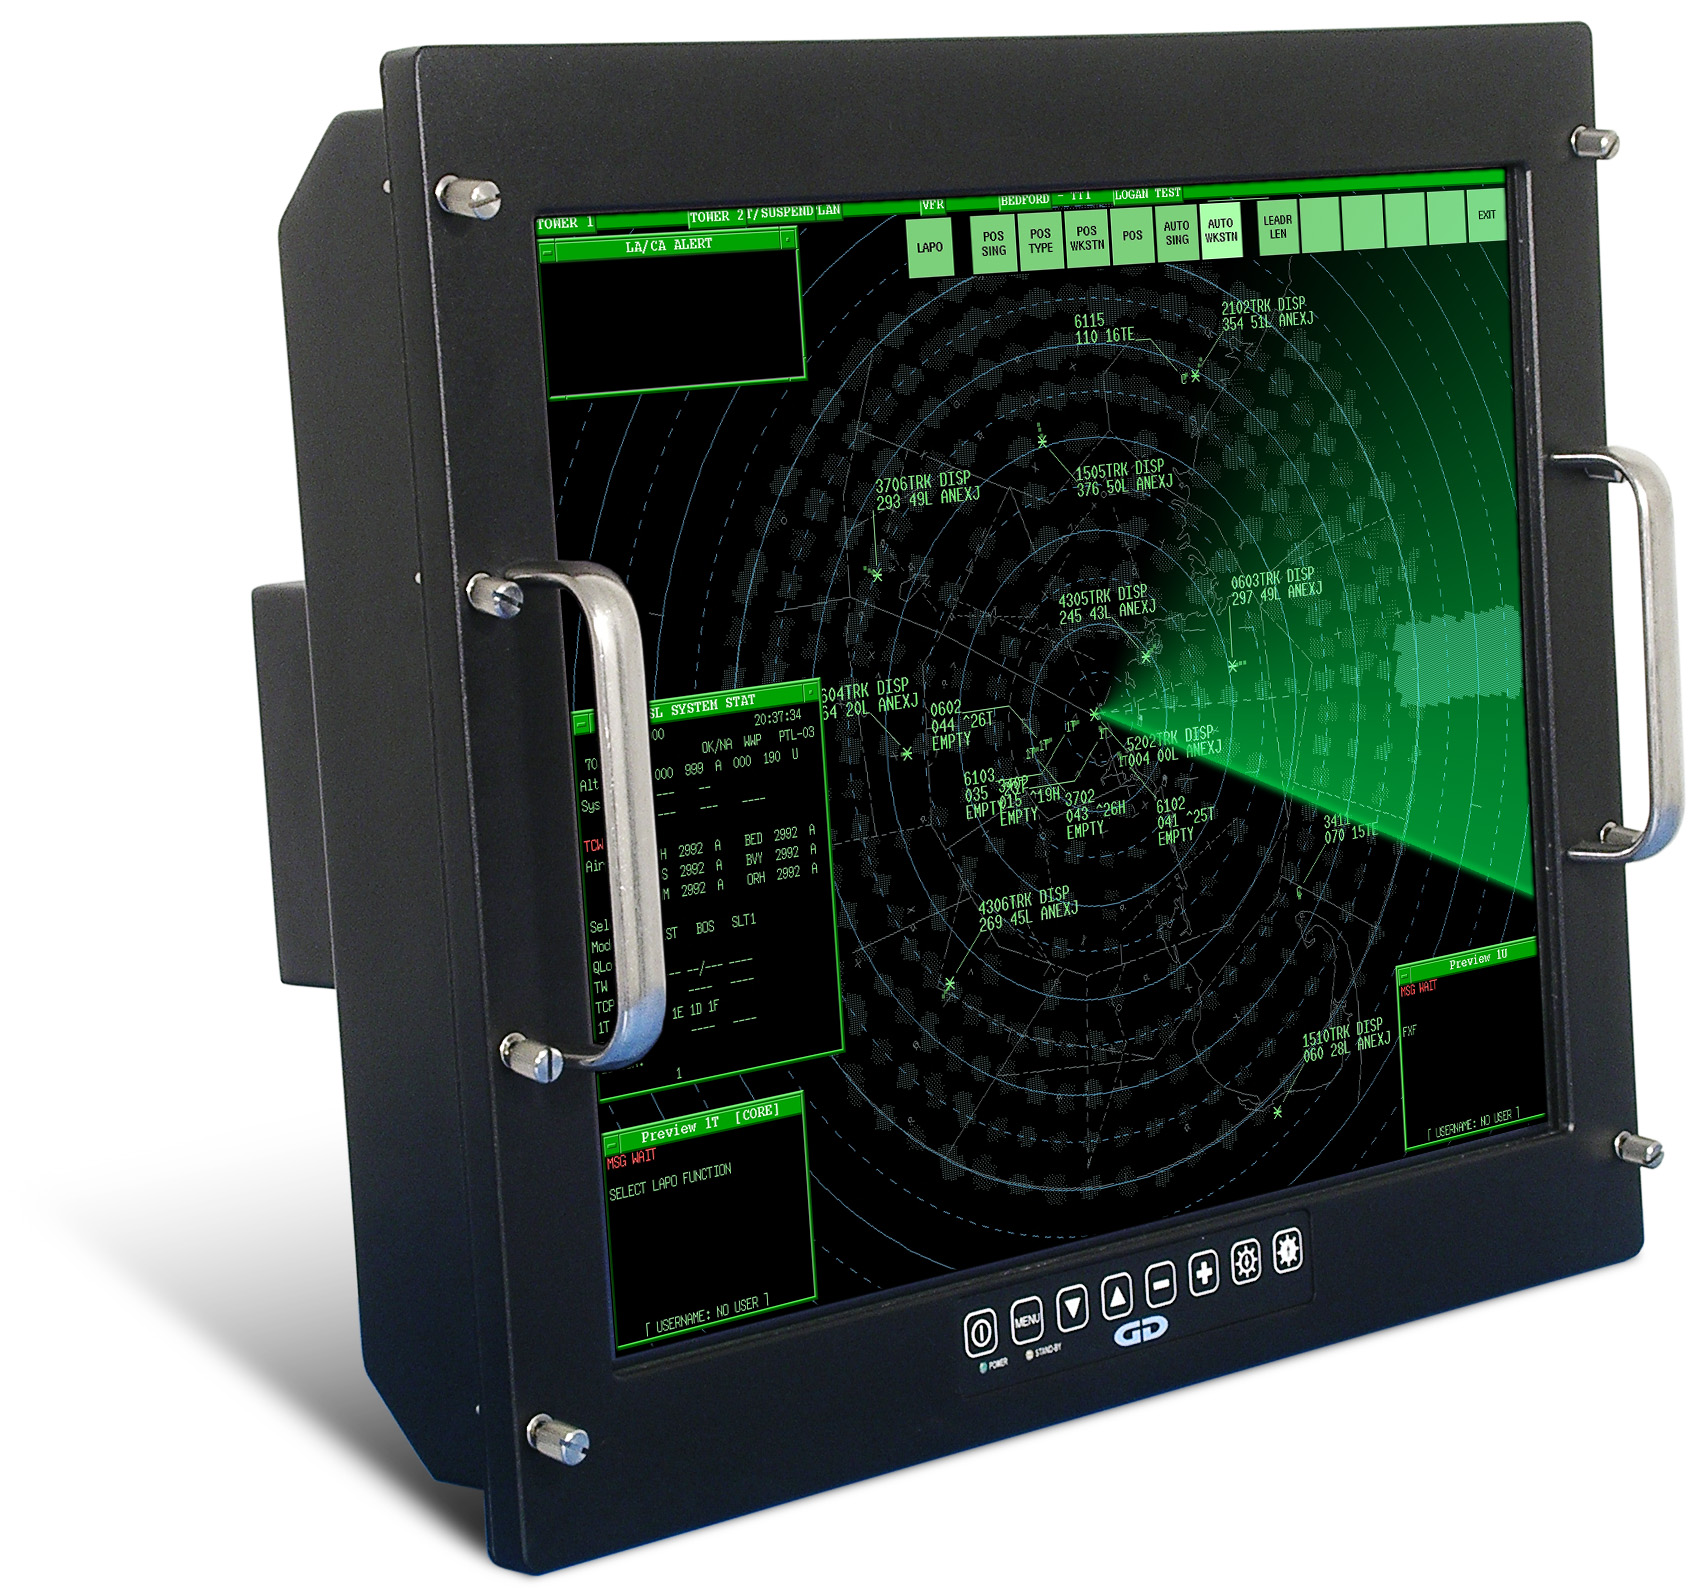 Saber RackMount Solar NVIS military-grade high bright monitor